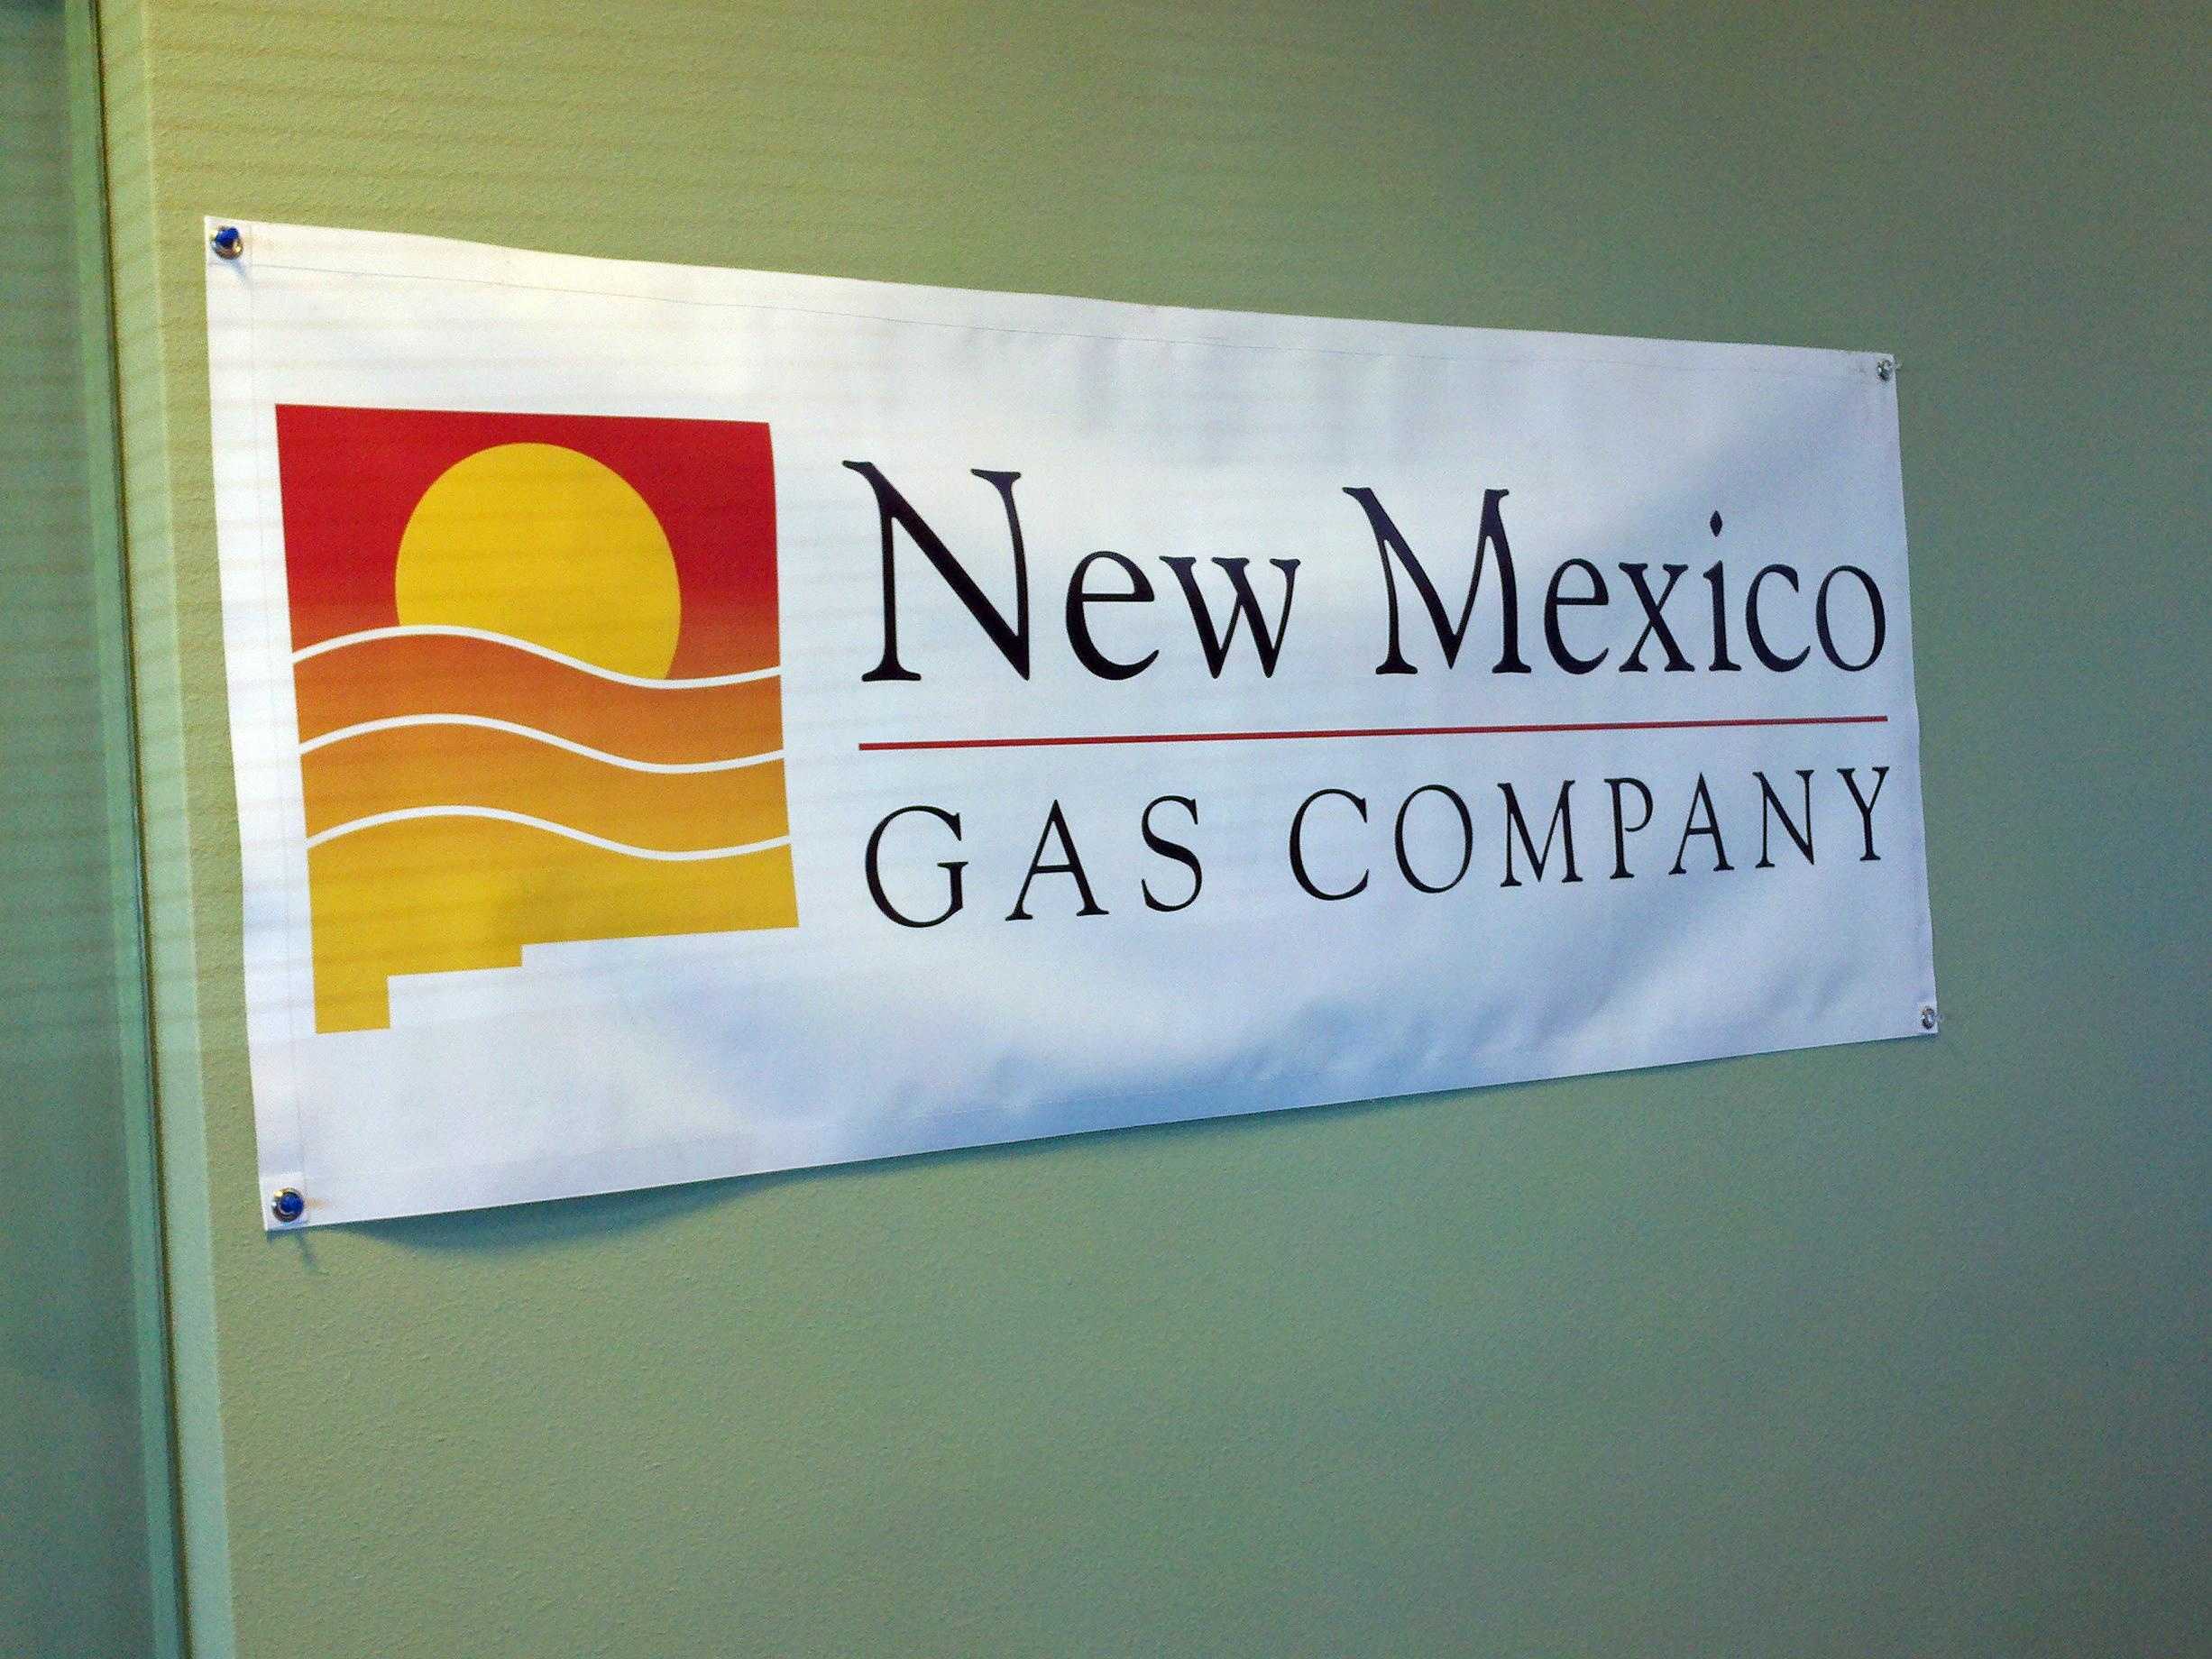 koat.com - Nick Catlin - New Mexico Gas Company to increase rates